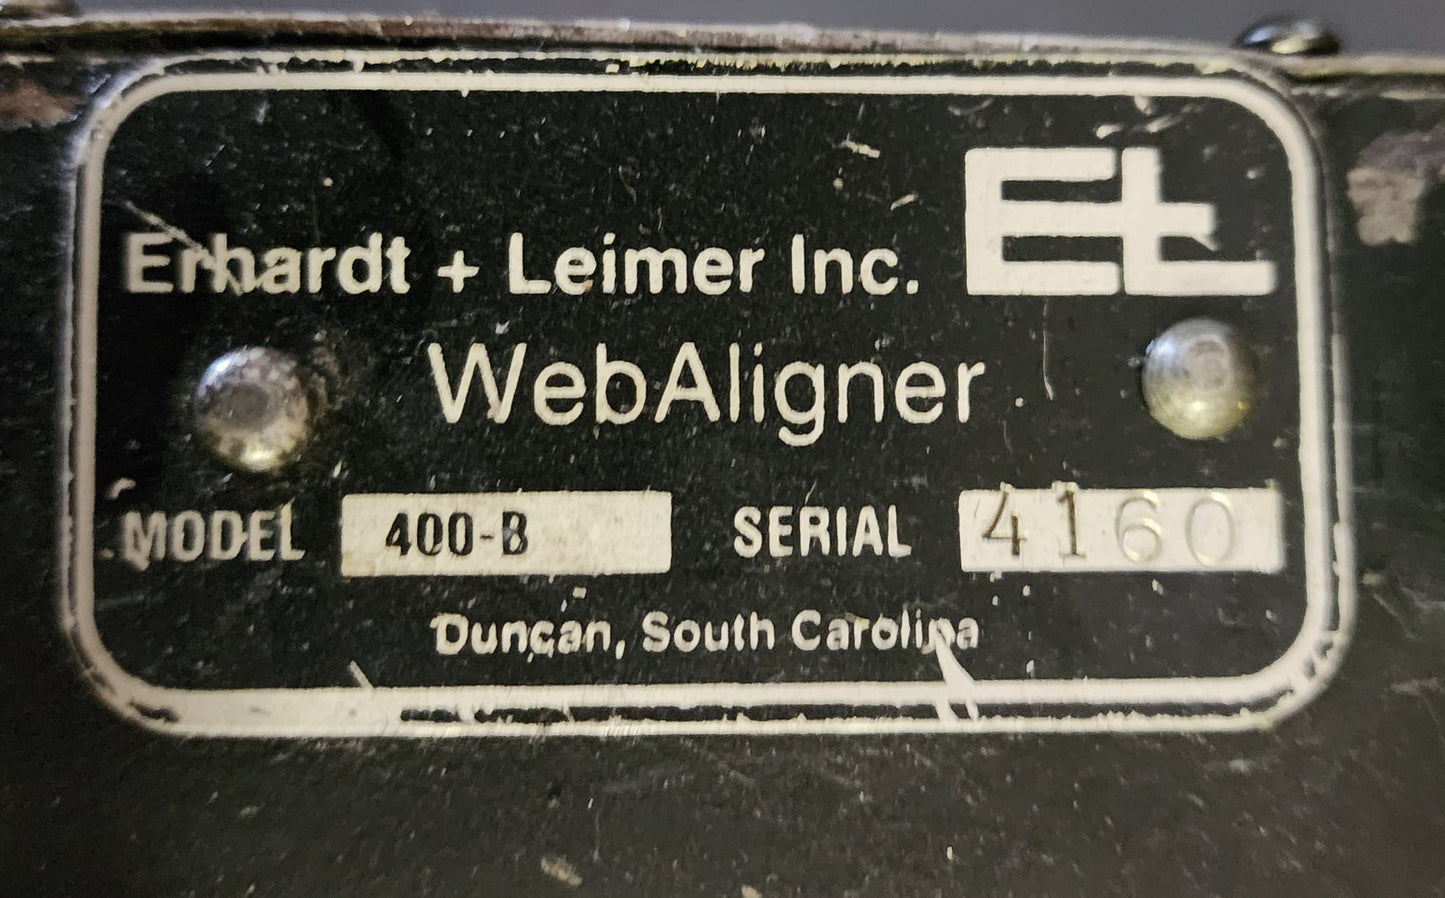 Erhardt + Leimer Inc. WebAligner Model 400-B Precision Industrial Printing Packaging Alignment